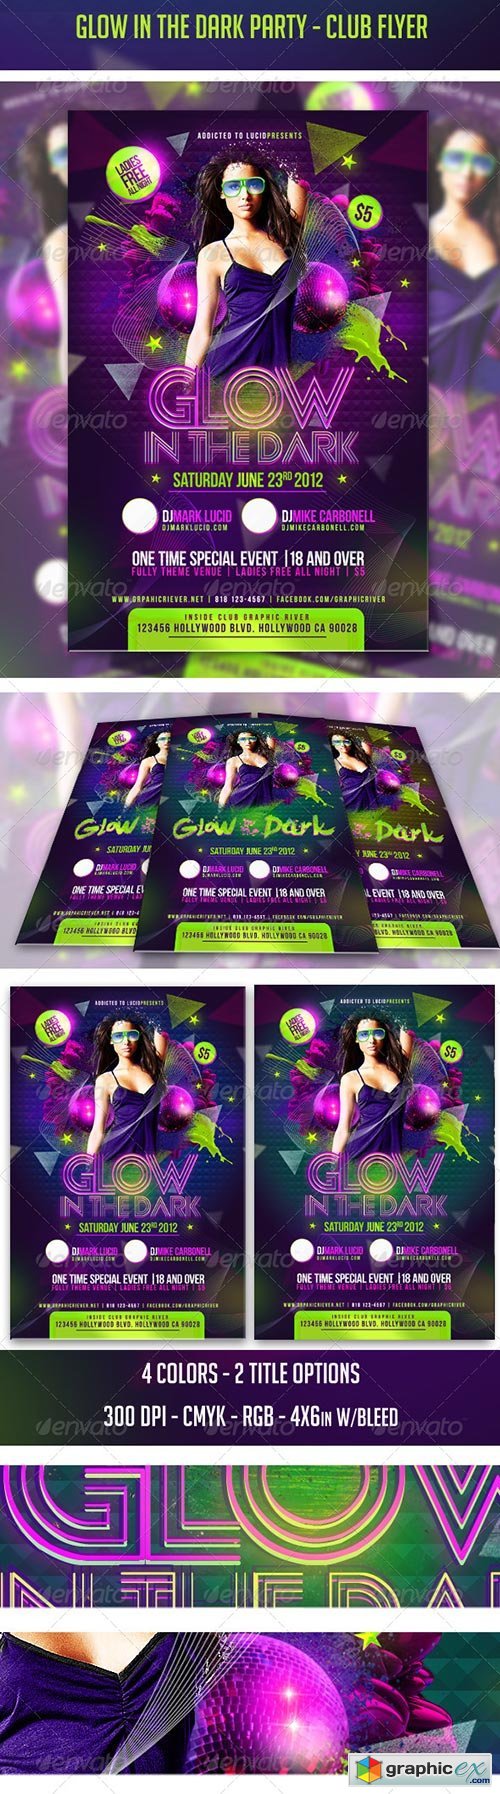 Glow in the Dark Party - Club Flyer